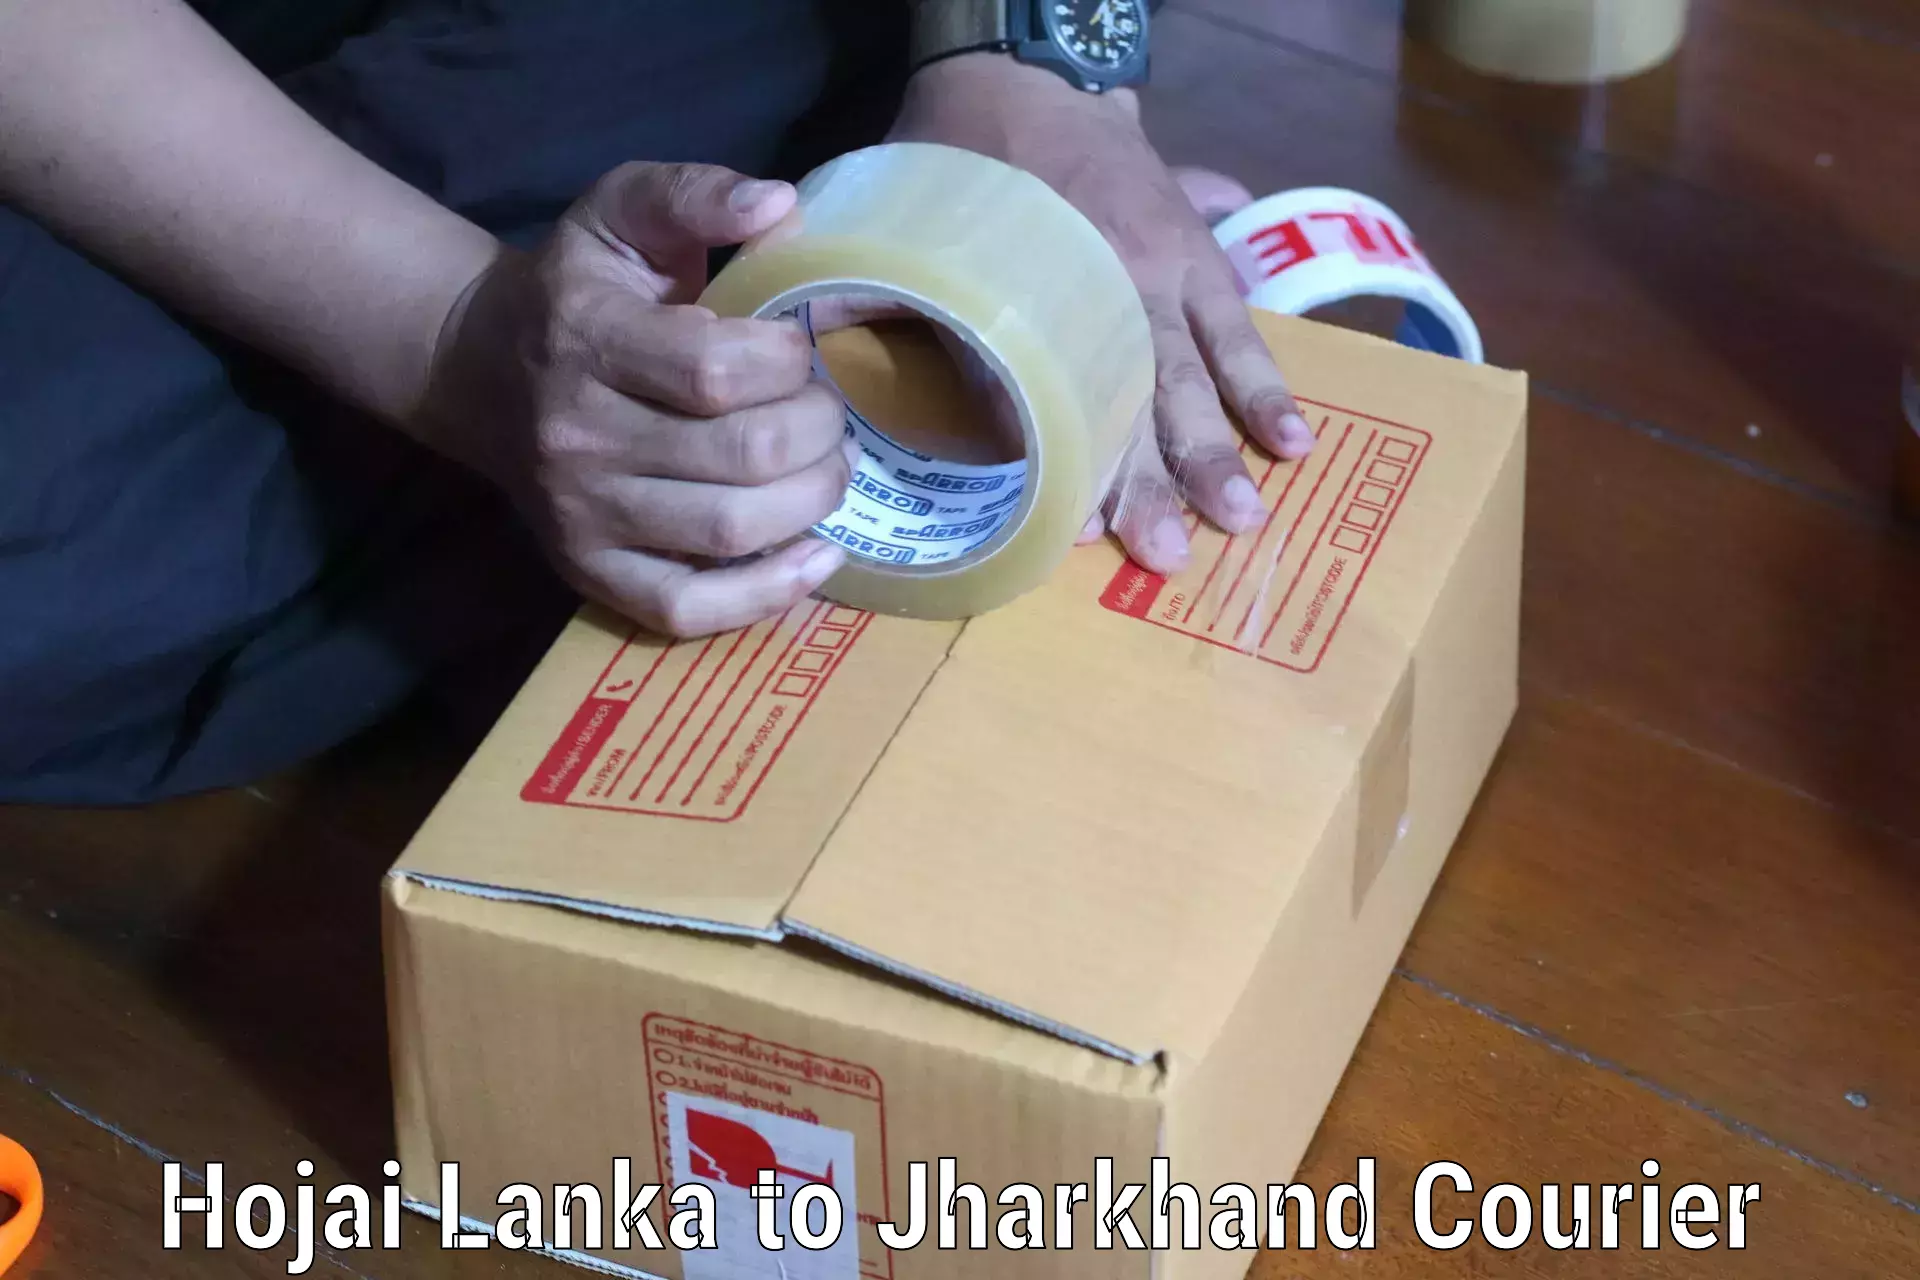 Secure freight services Hojai Lanka to Pakur